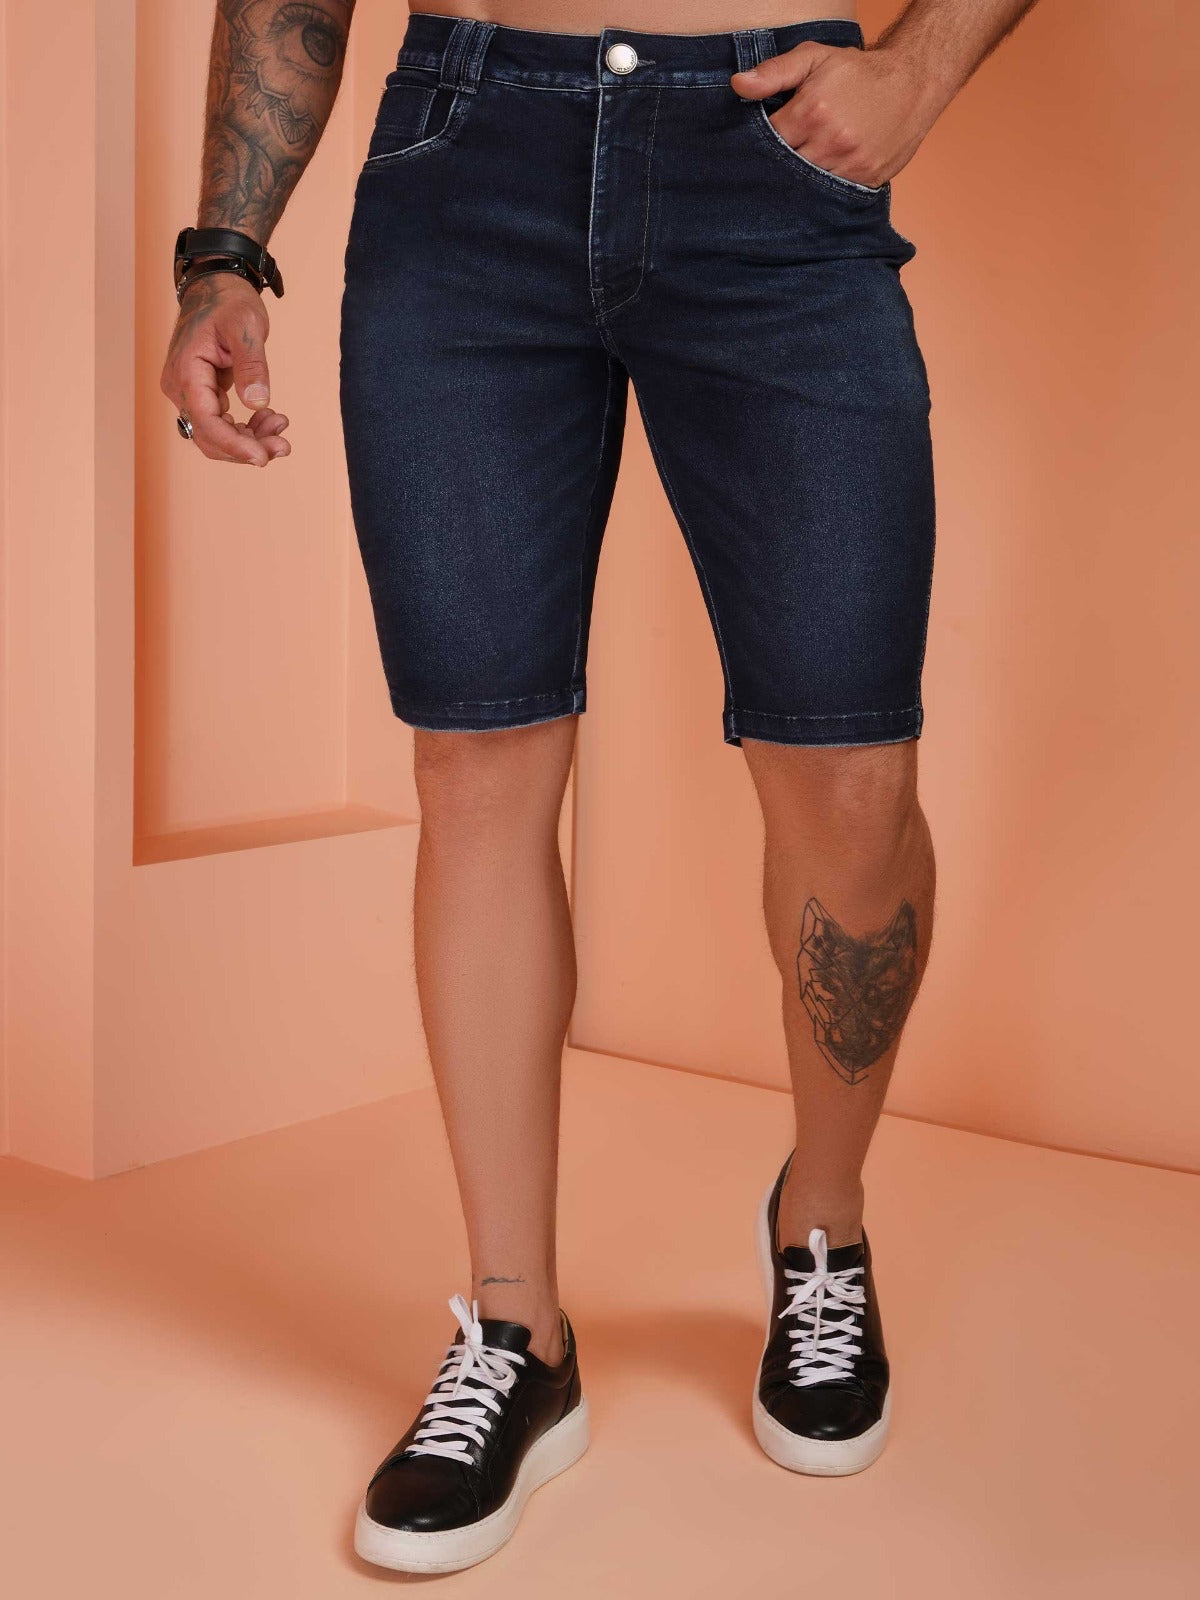 Pit Bull Jeans men's Jeans Shorts 64920